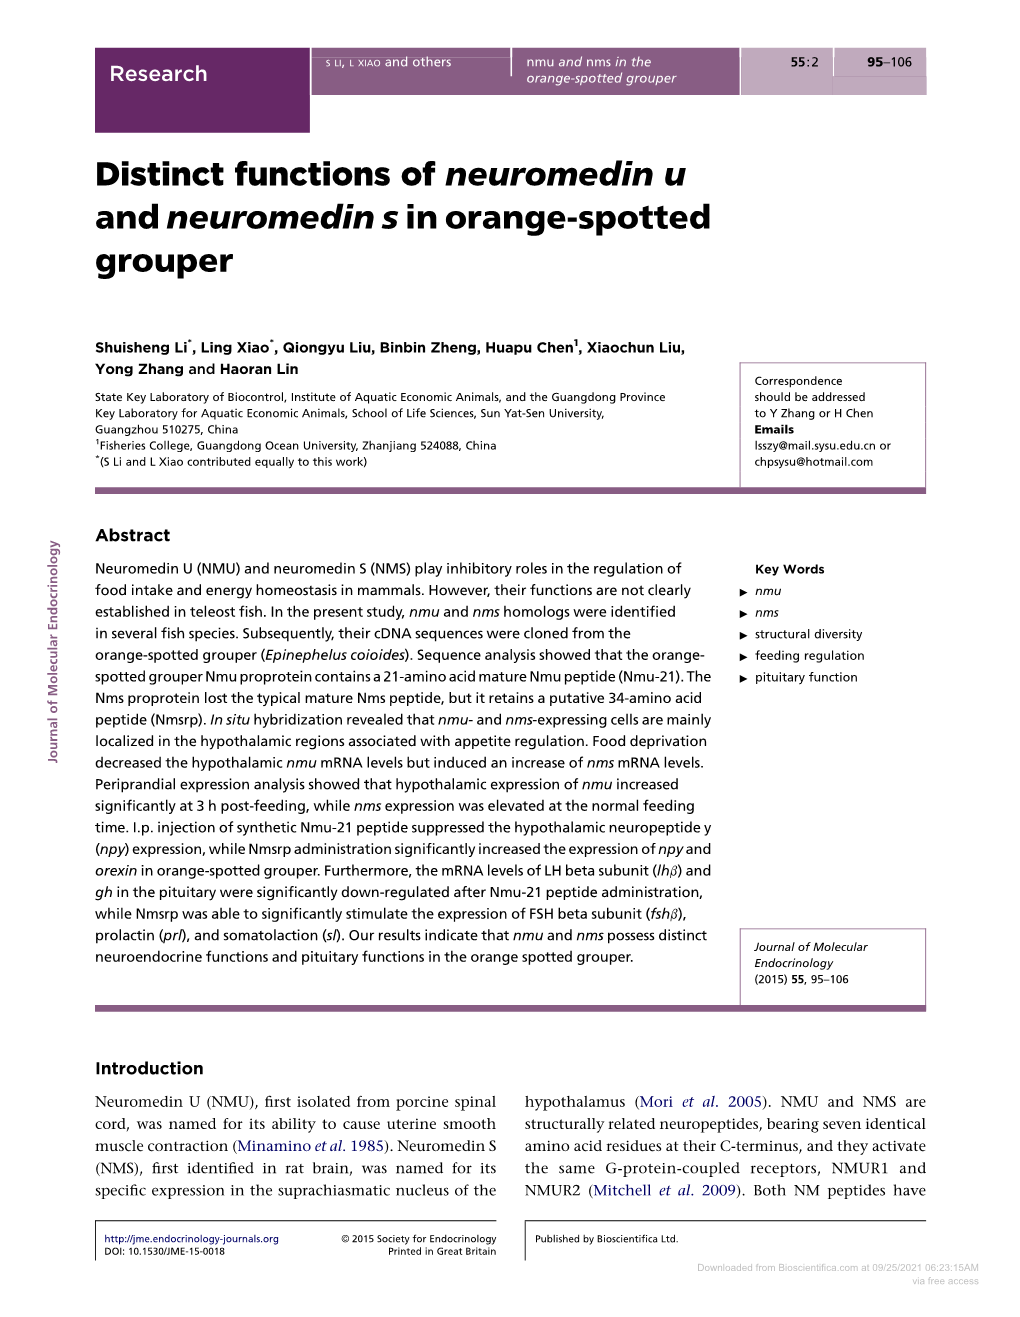 Distinct Functions of Neuromedin U and Neuromedin S in Orange-Spotted Grouper